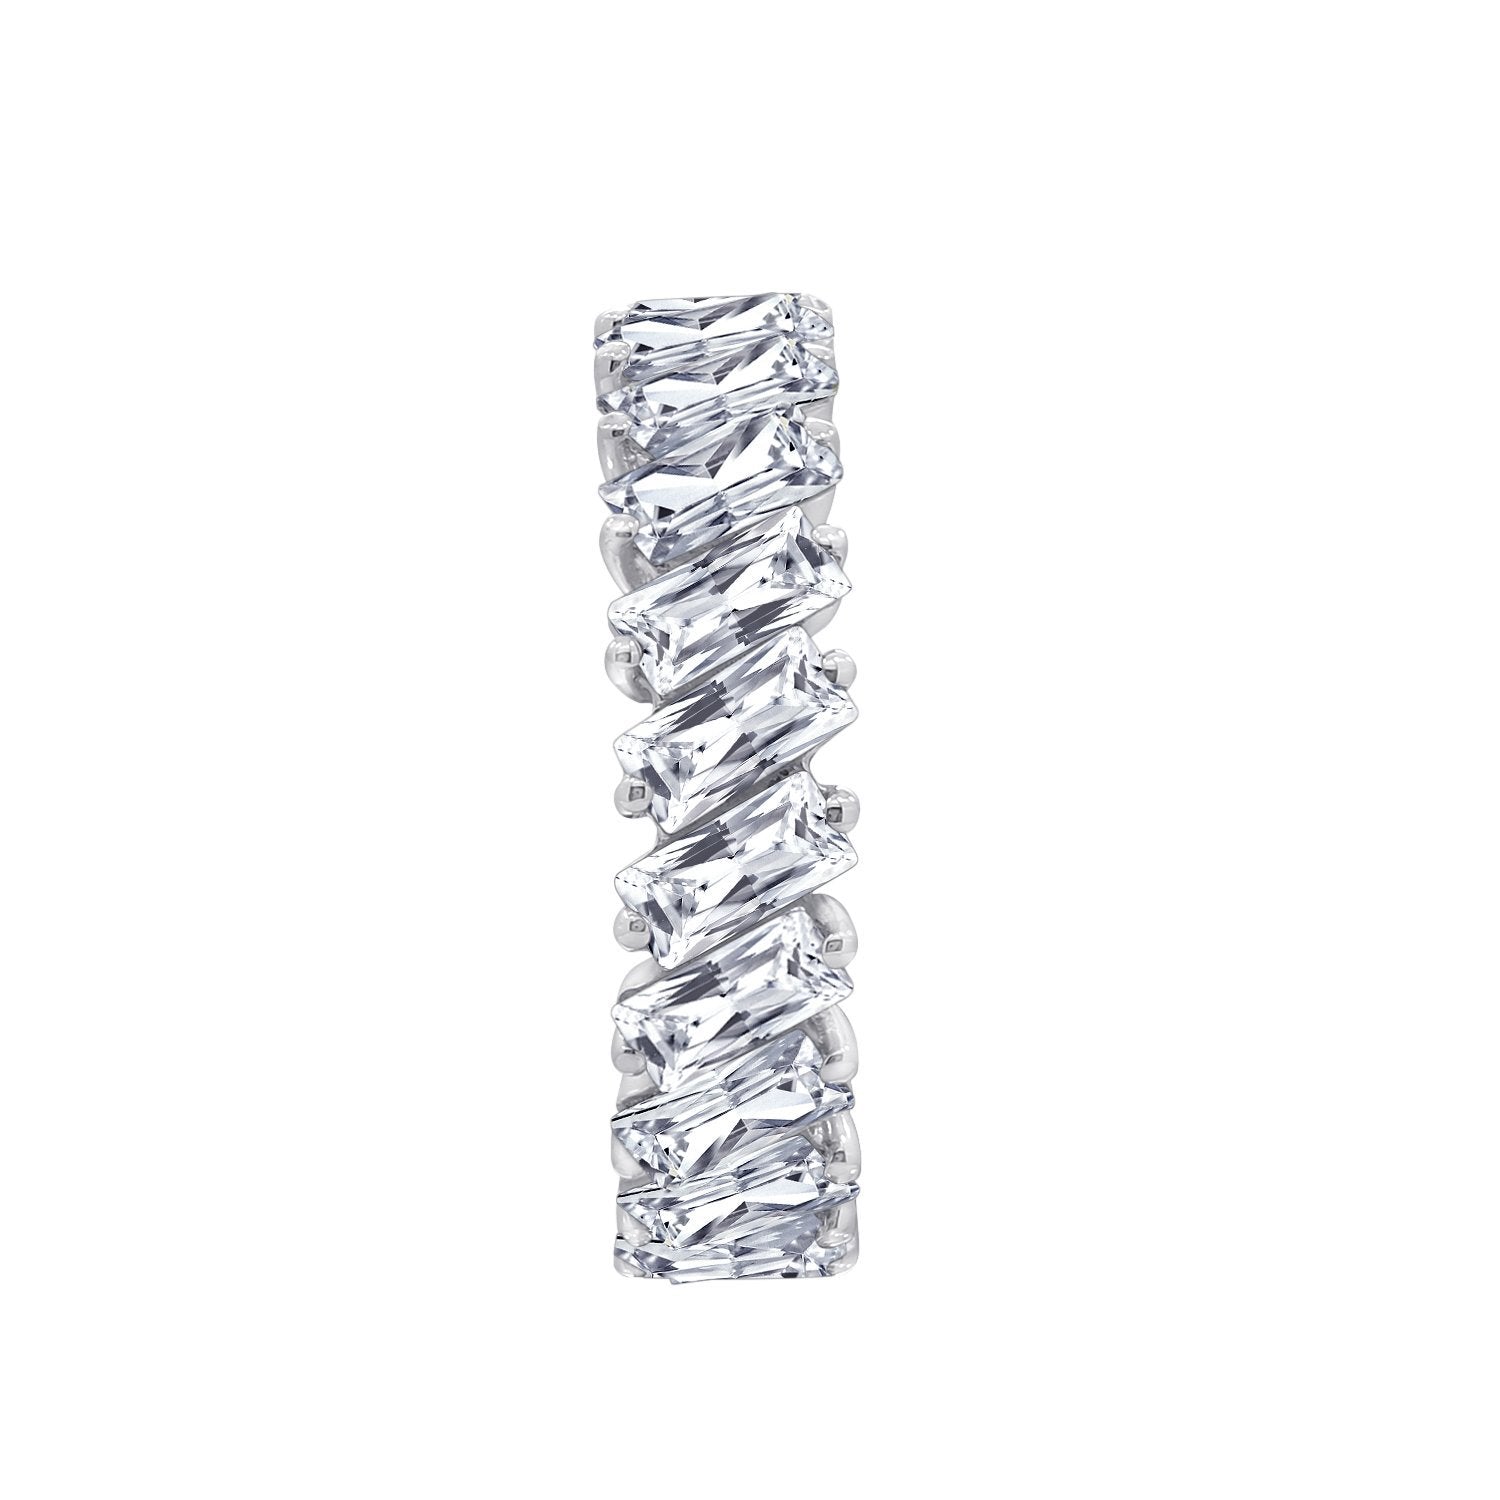 KIERA NEW YORK Platinum Clad Sterling Silver 5.28 cttw Baguette Cut Cubic Zirconia Ring